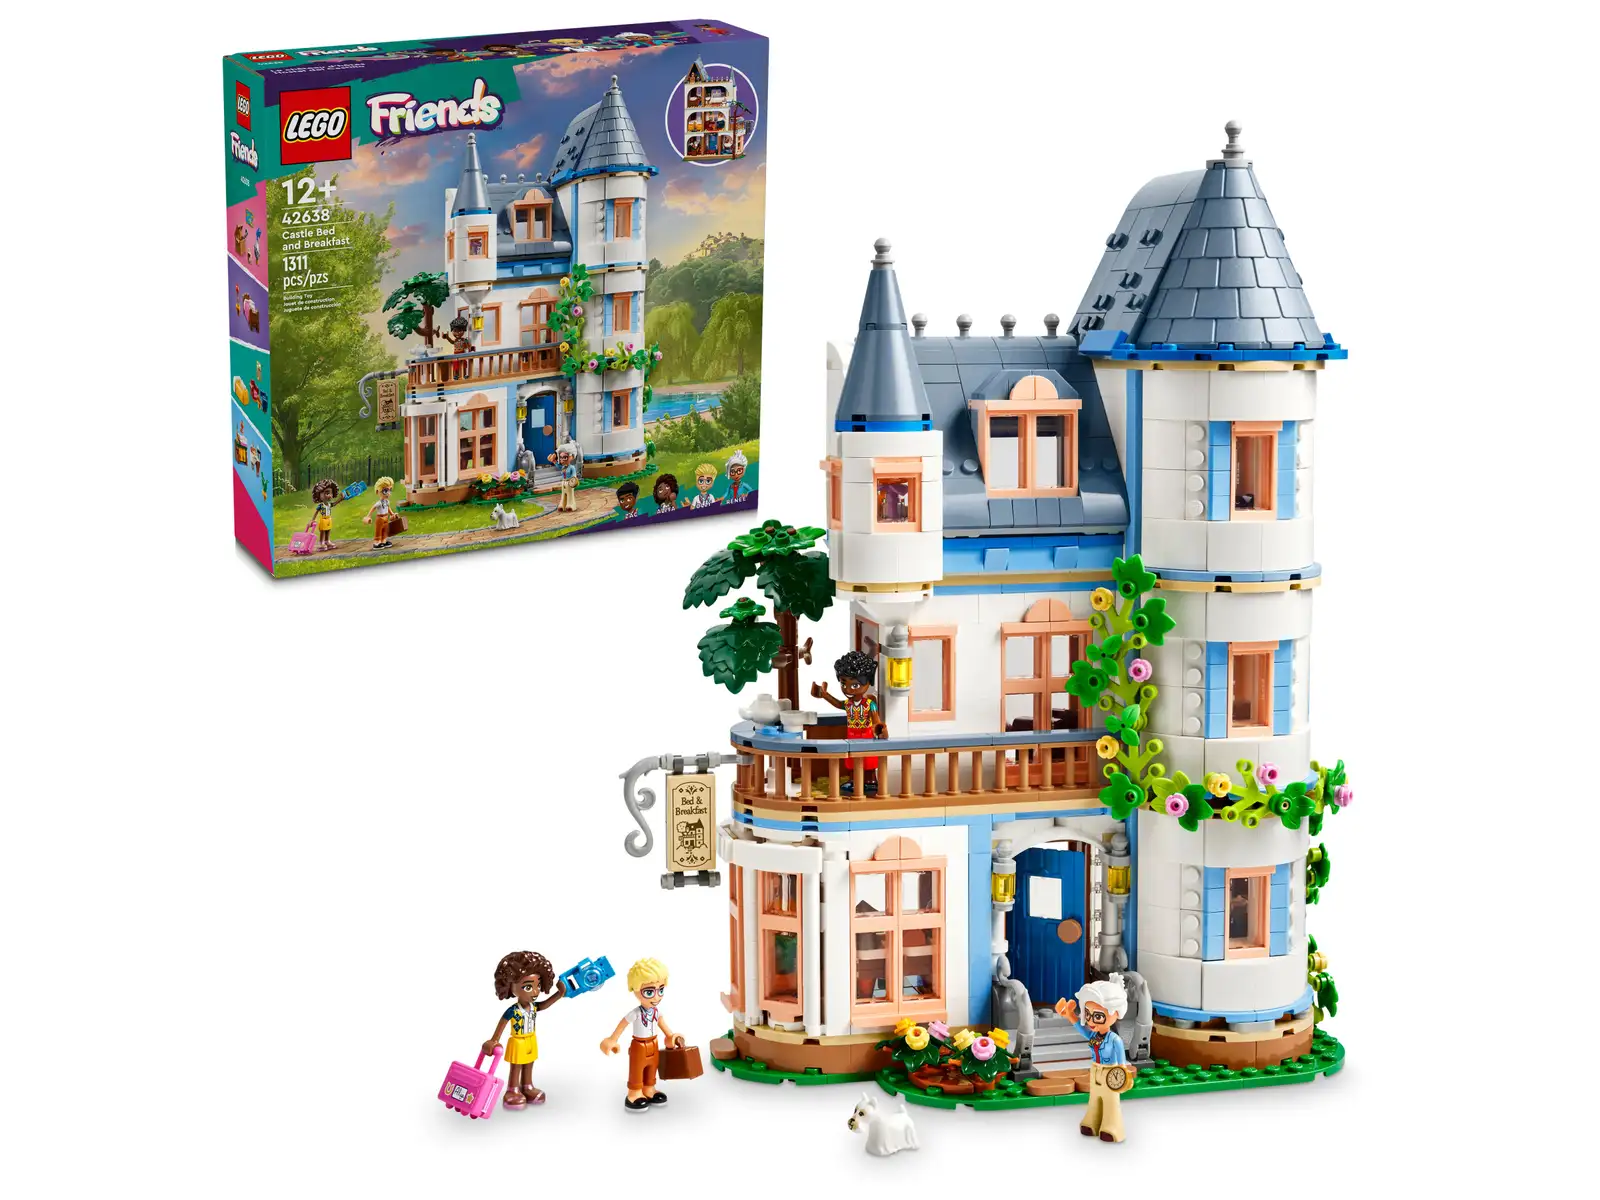 LEGO 42638 Slottshotell med frokost 42638 - Lego friends